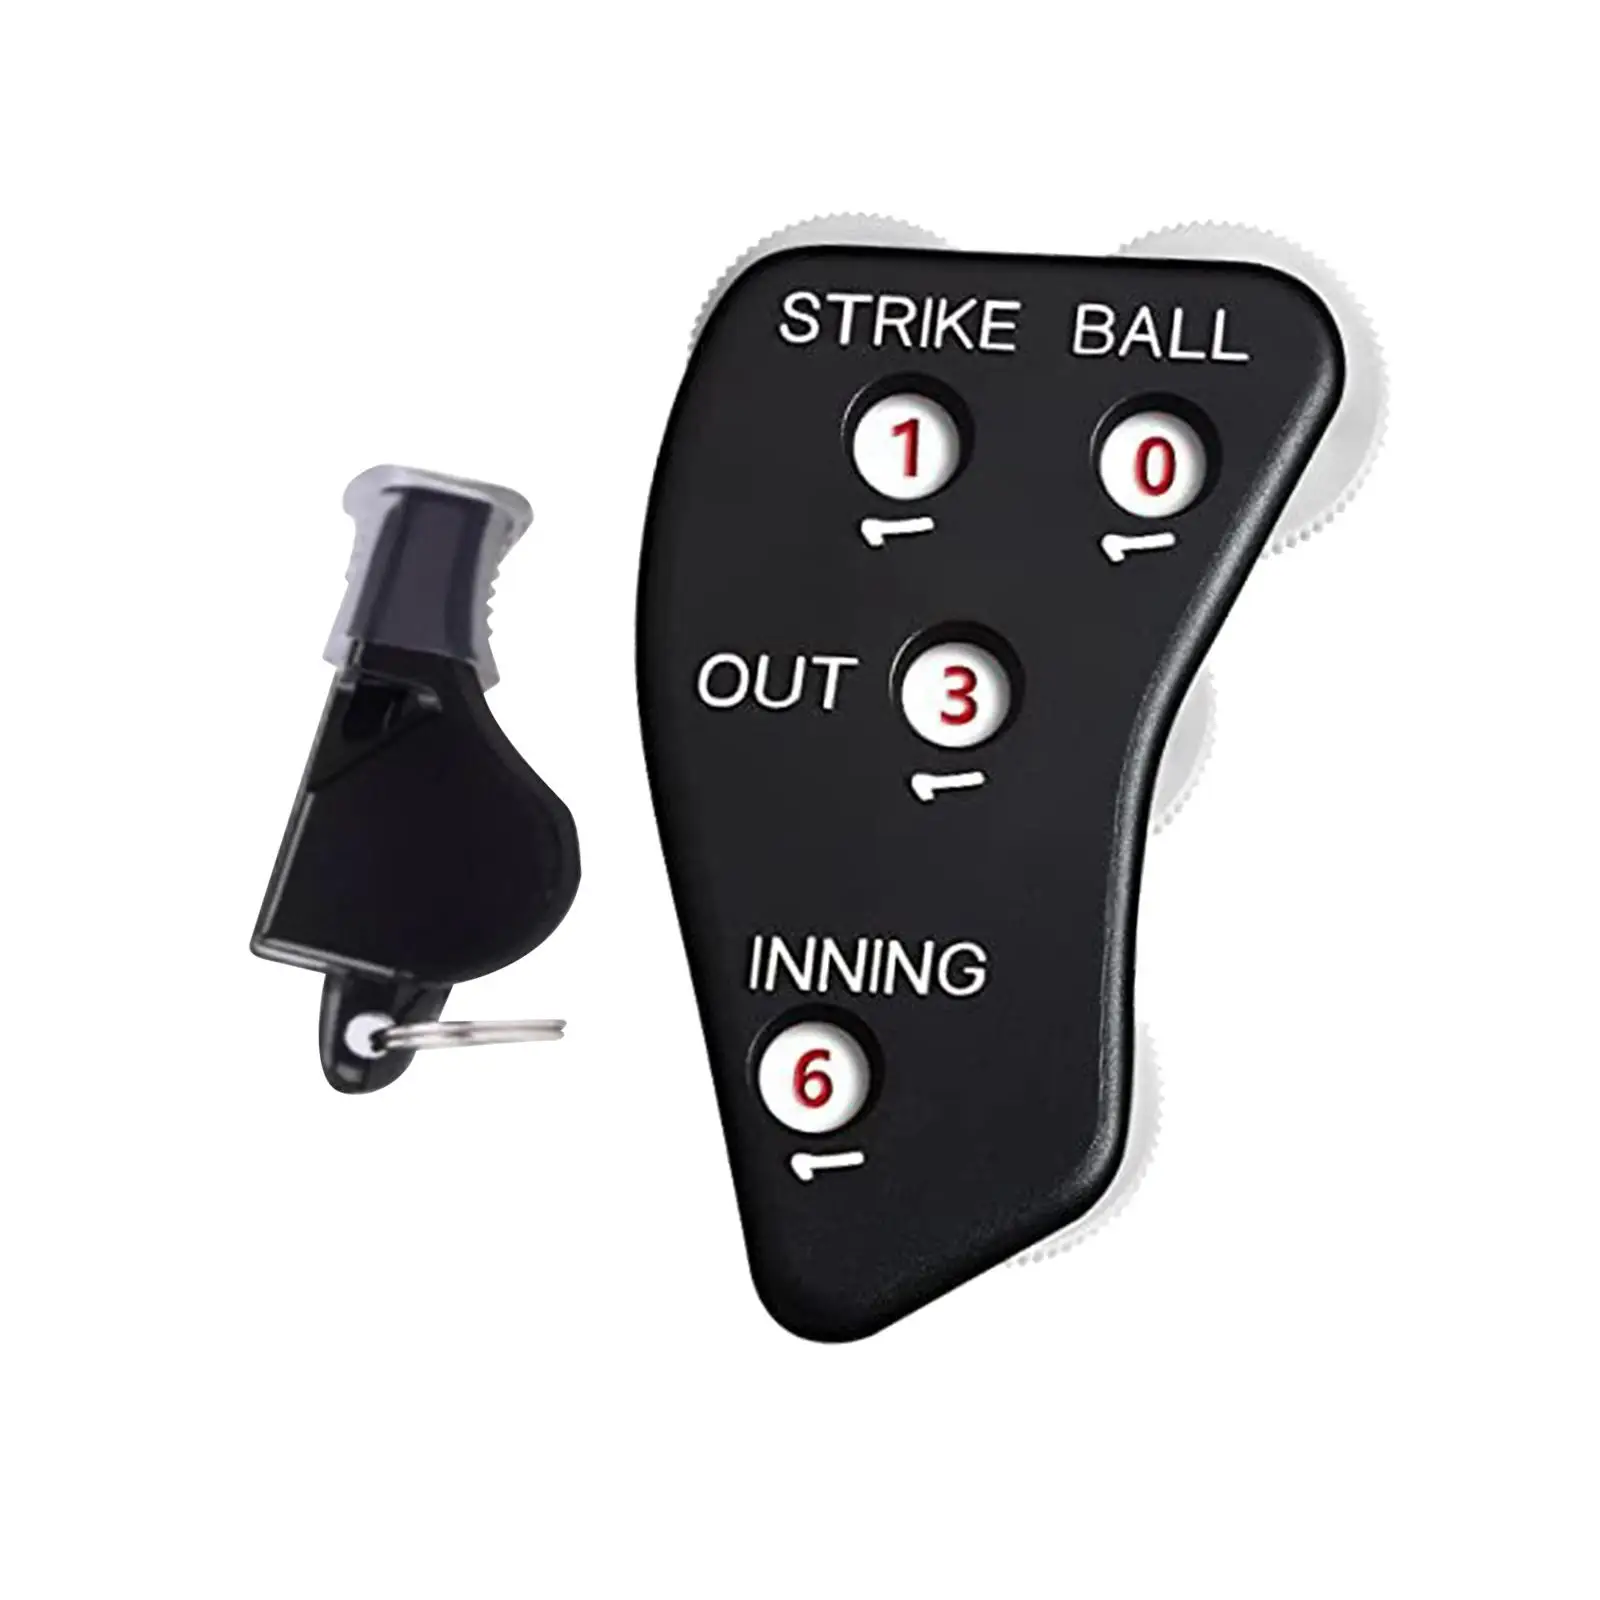 4 Wheel Baseball Umpire Ball Strike Softball Score Counter Supplies Accessories Baseball Umpire Gear Indicator Innings